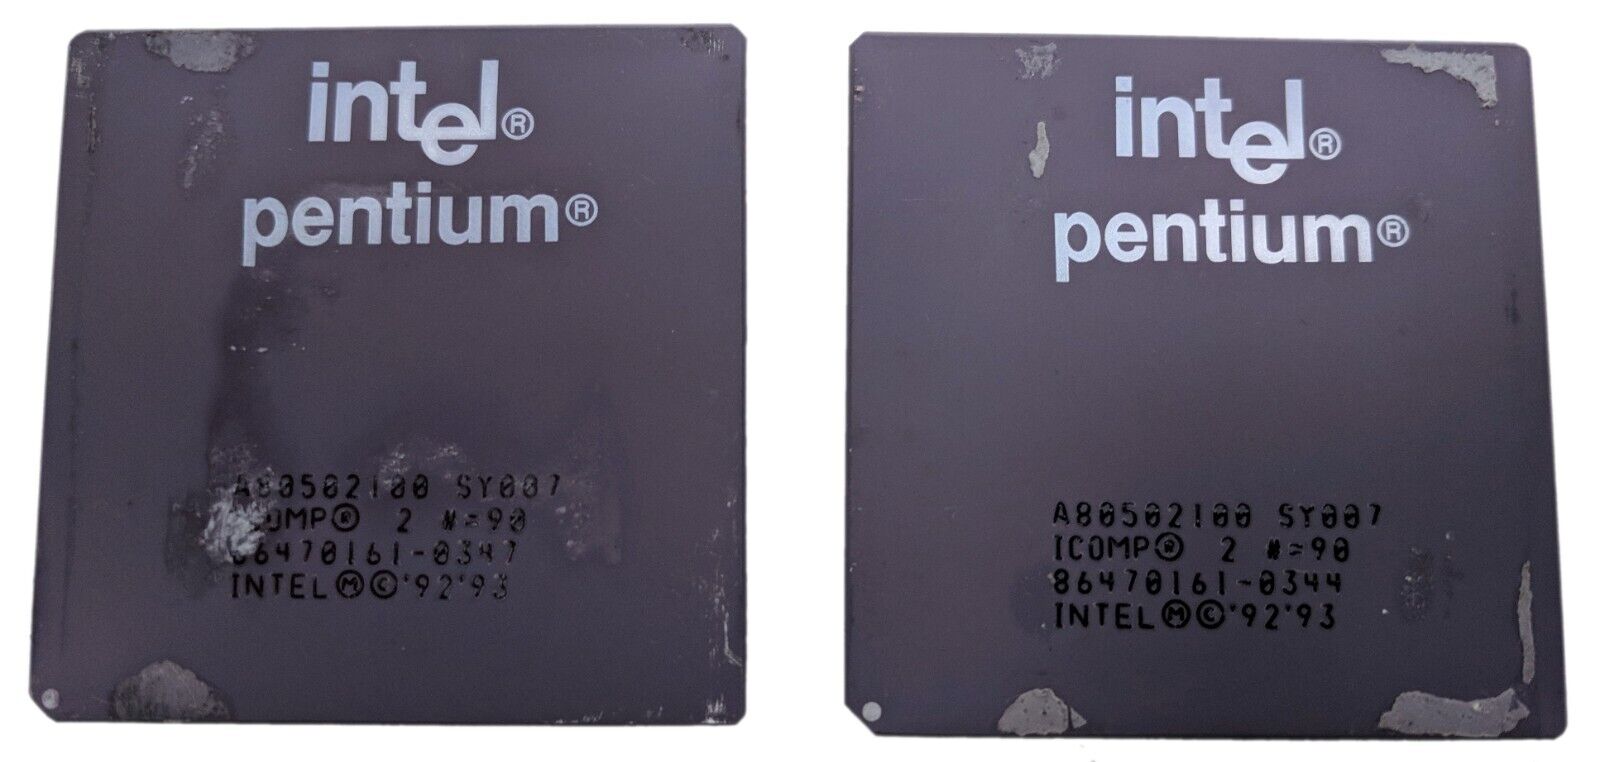 VTG Lot of 2 Intel Pentium 100MHz SY007 Socket 7 A80502100 Ceramic Processor CPU